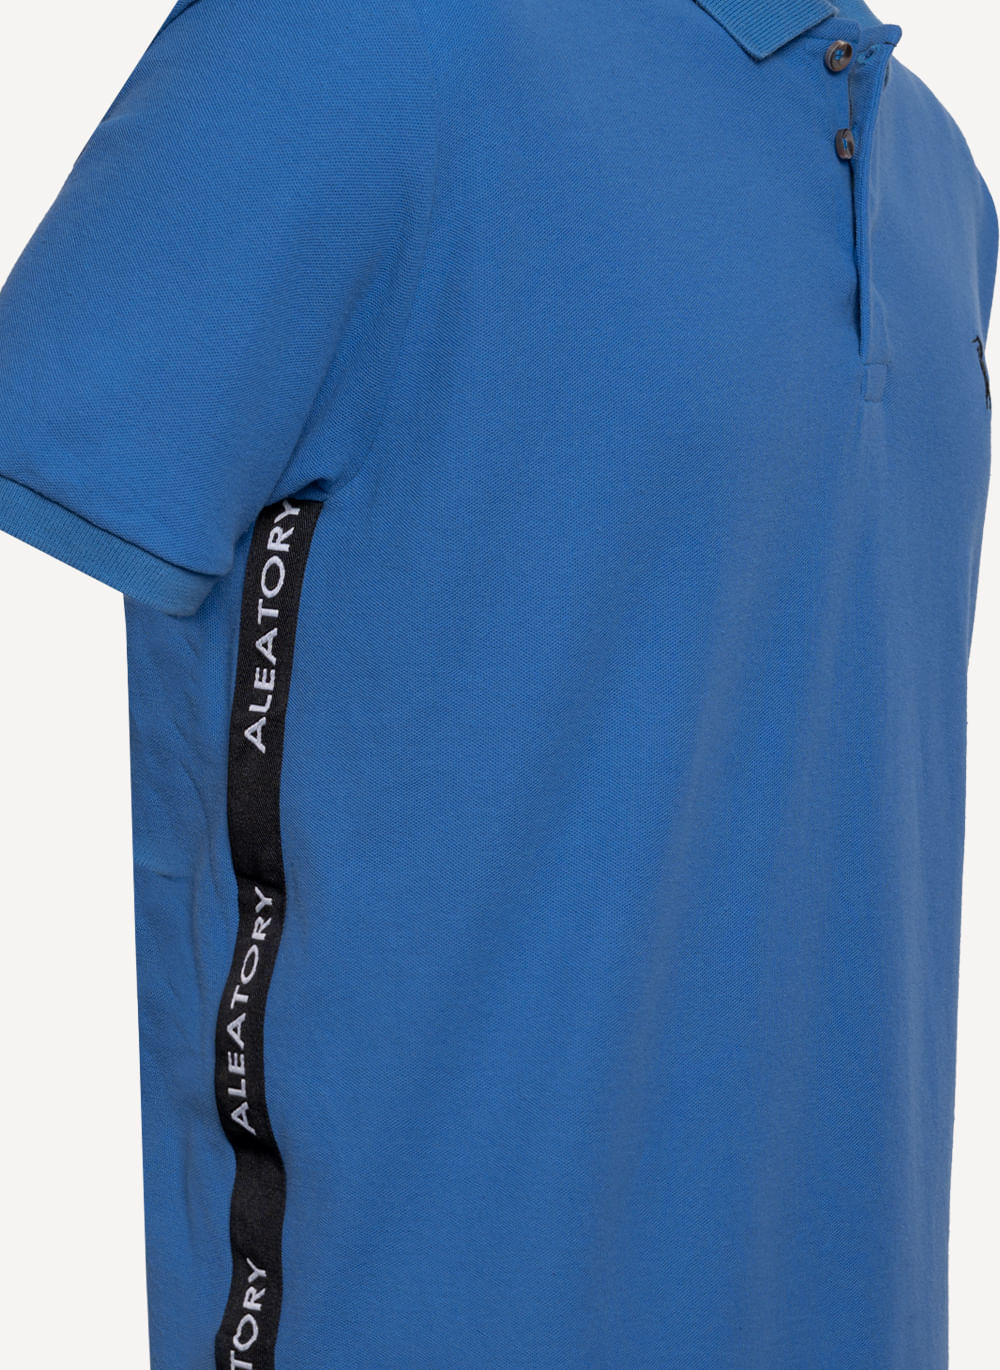 Camisa-Polo-Aleatory-Side-Detail-Azul-Azul-P